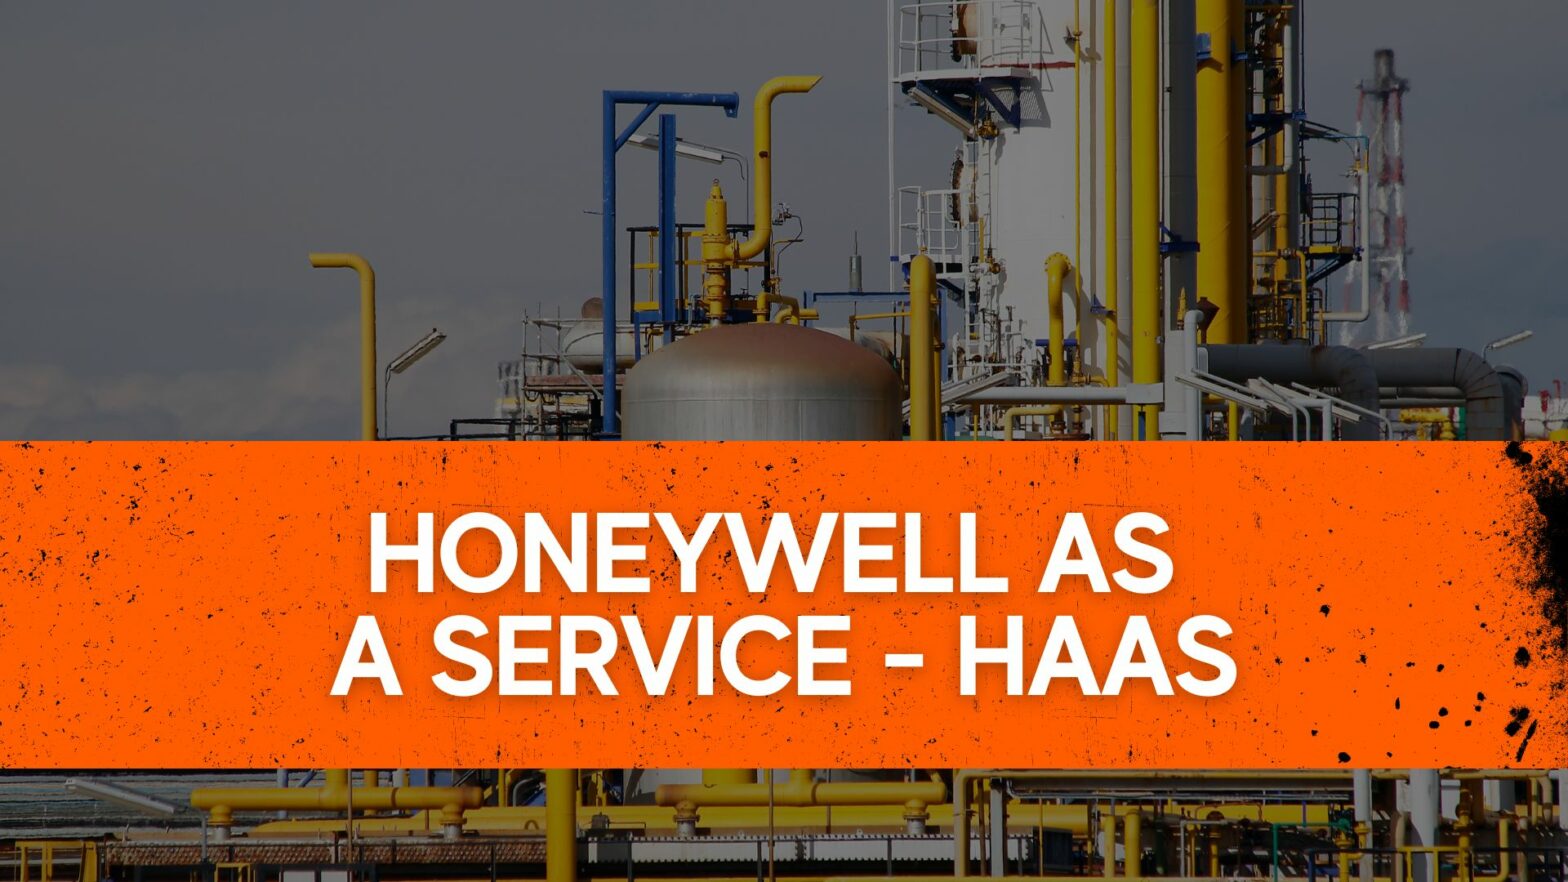 Honeywell as a Service - HaaS